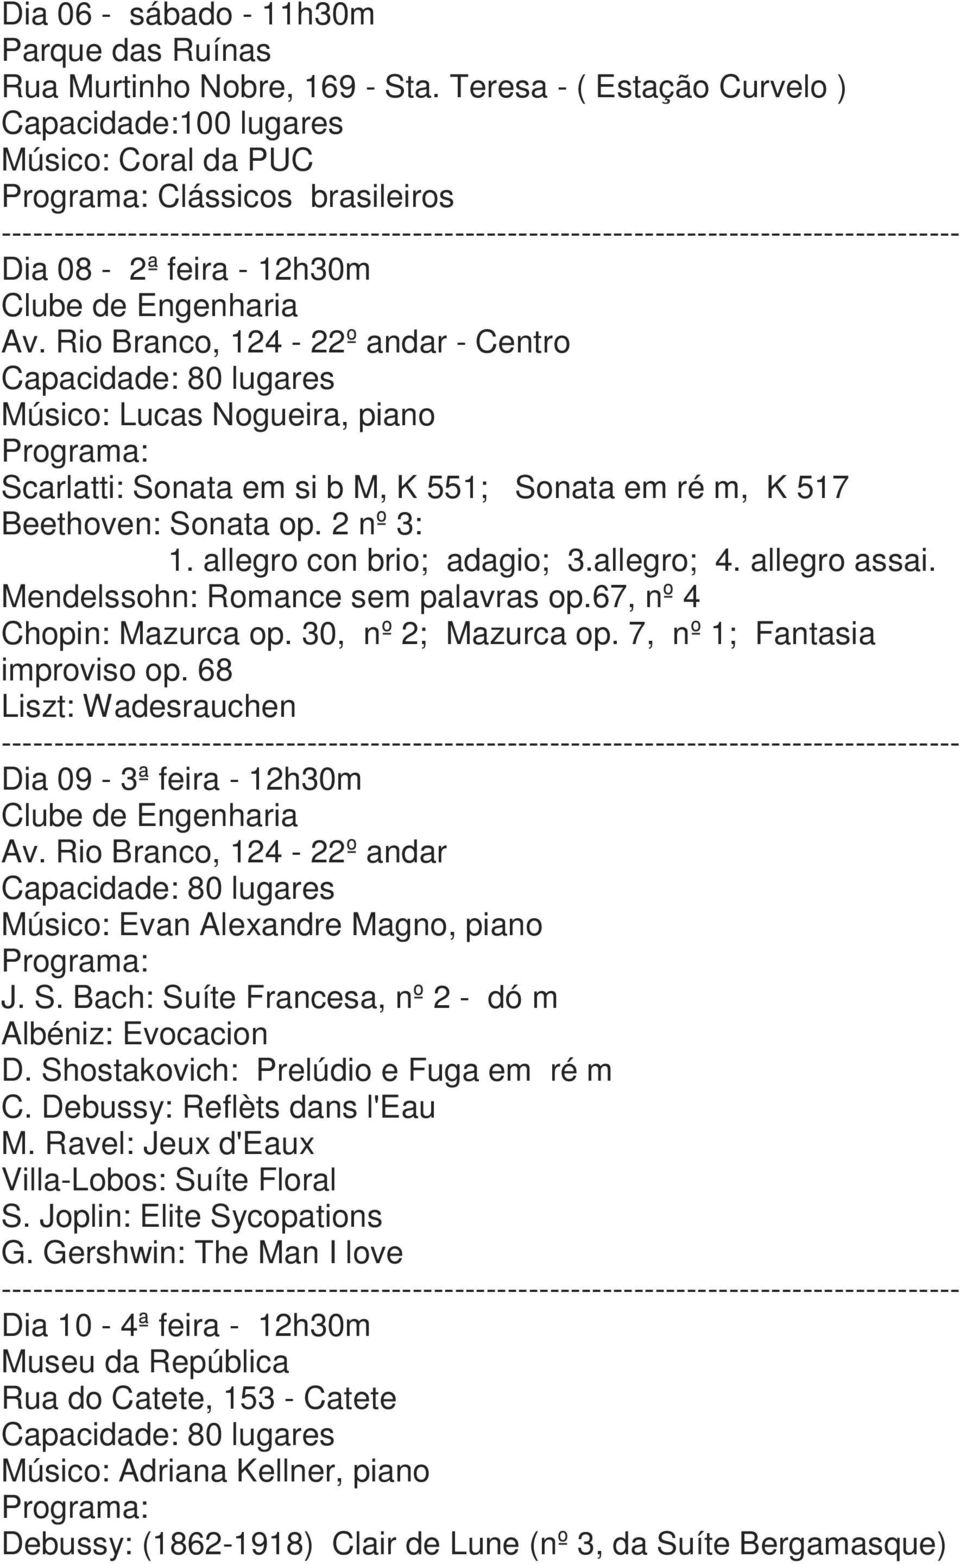 Rio Branco, 124-22º andar - Centro Capacidade: 80 lugares Músico: Lucas Nogueira, piano Scarlatti: Sonata em si b M, K 551; Sonata em ré m, K 517 Beethoven: Sonata op. 2 nº 3: 1.